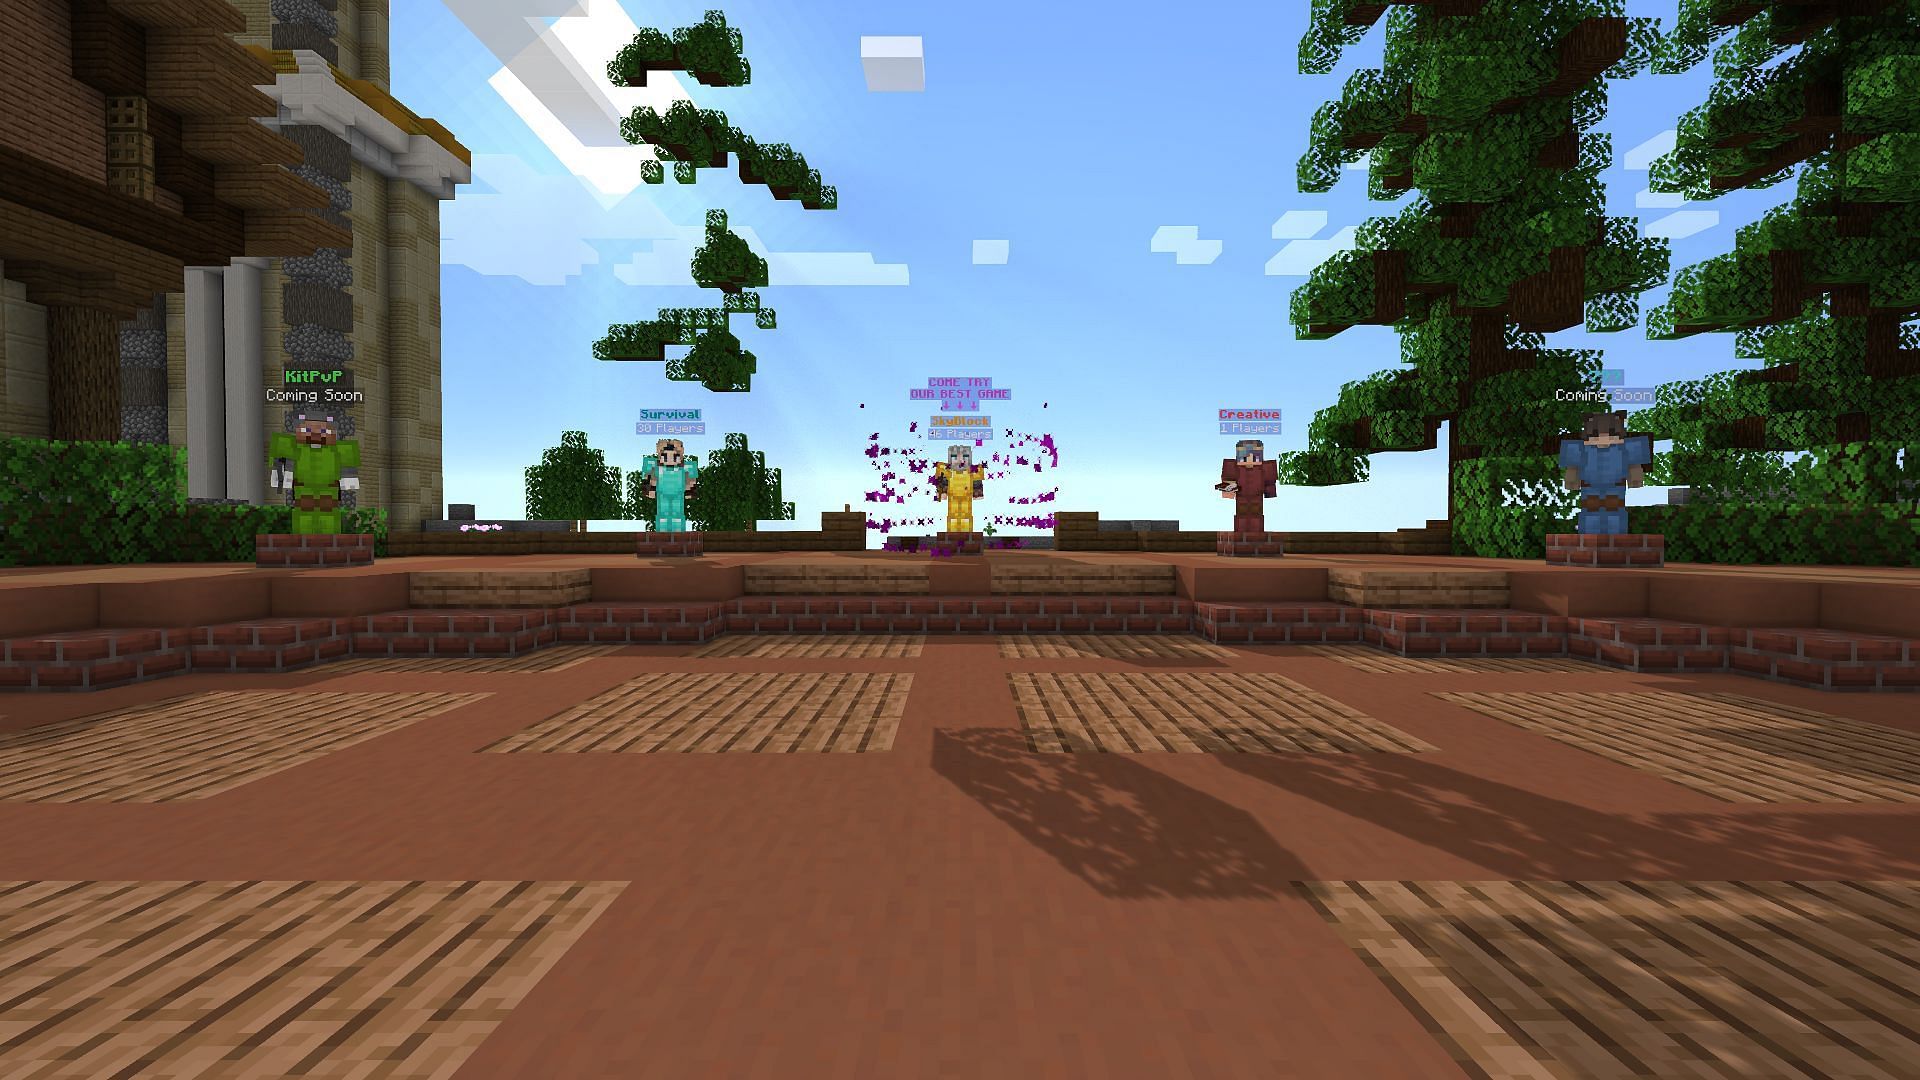 The PlayFuse server spawn area (Image via Minecraft)